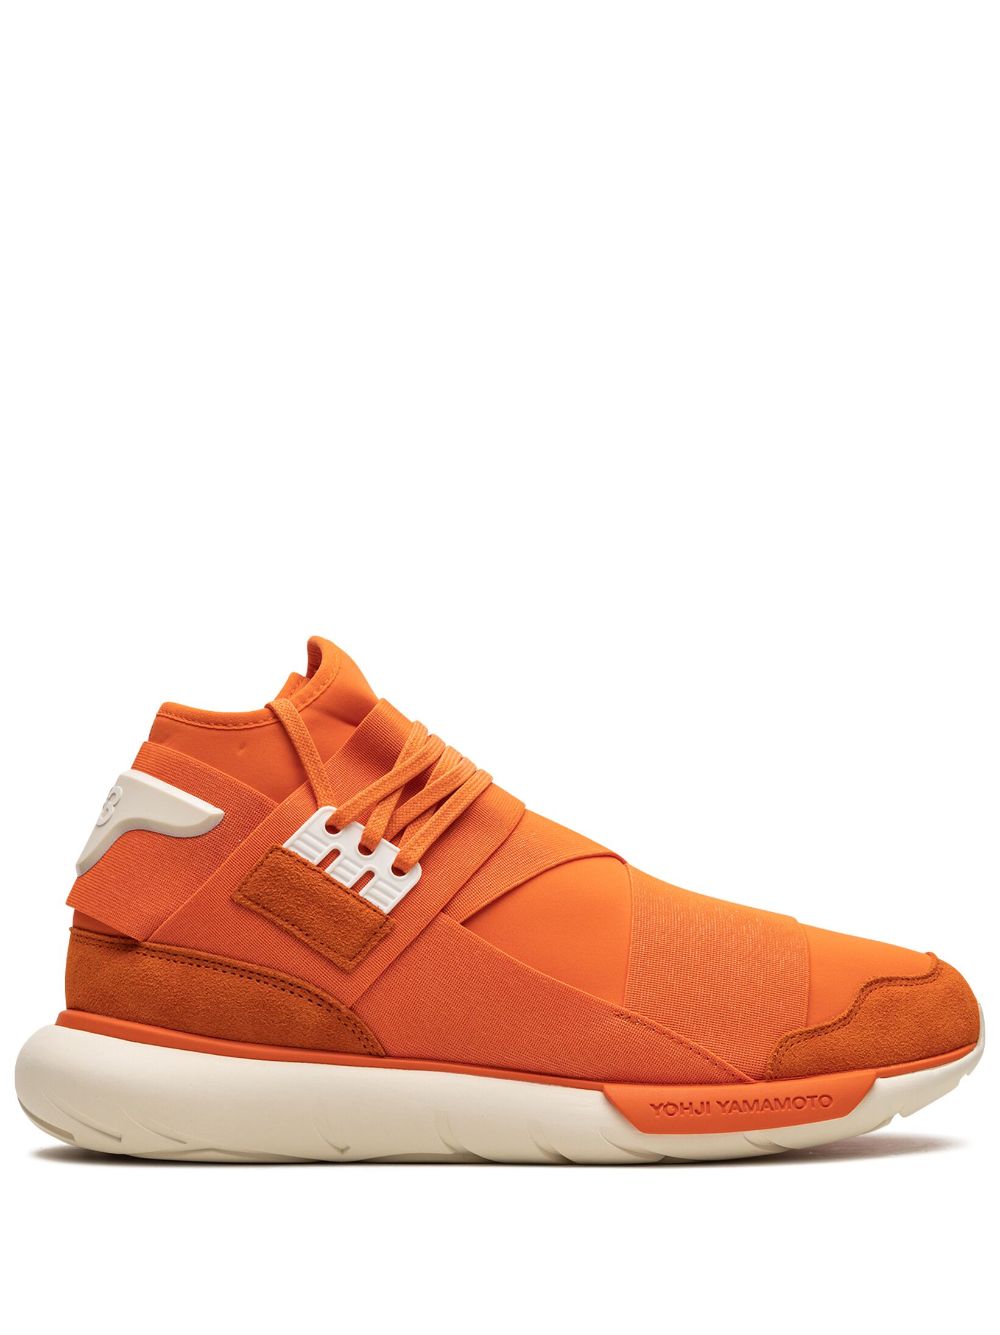 adidas x Y-3 Qasa high-top sneakers - Orange von adidas